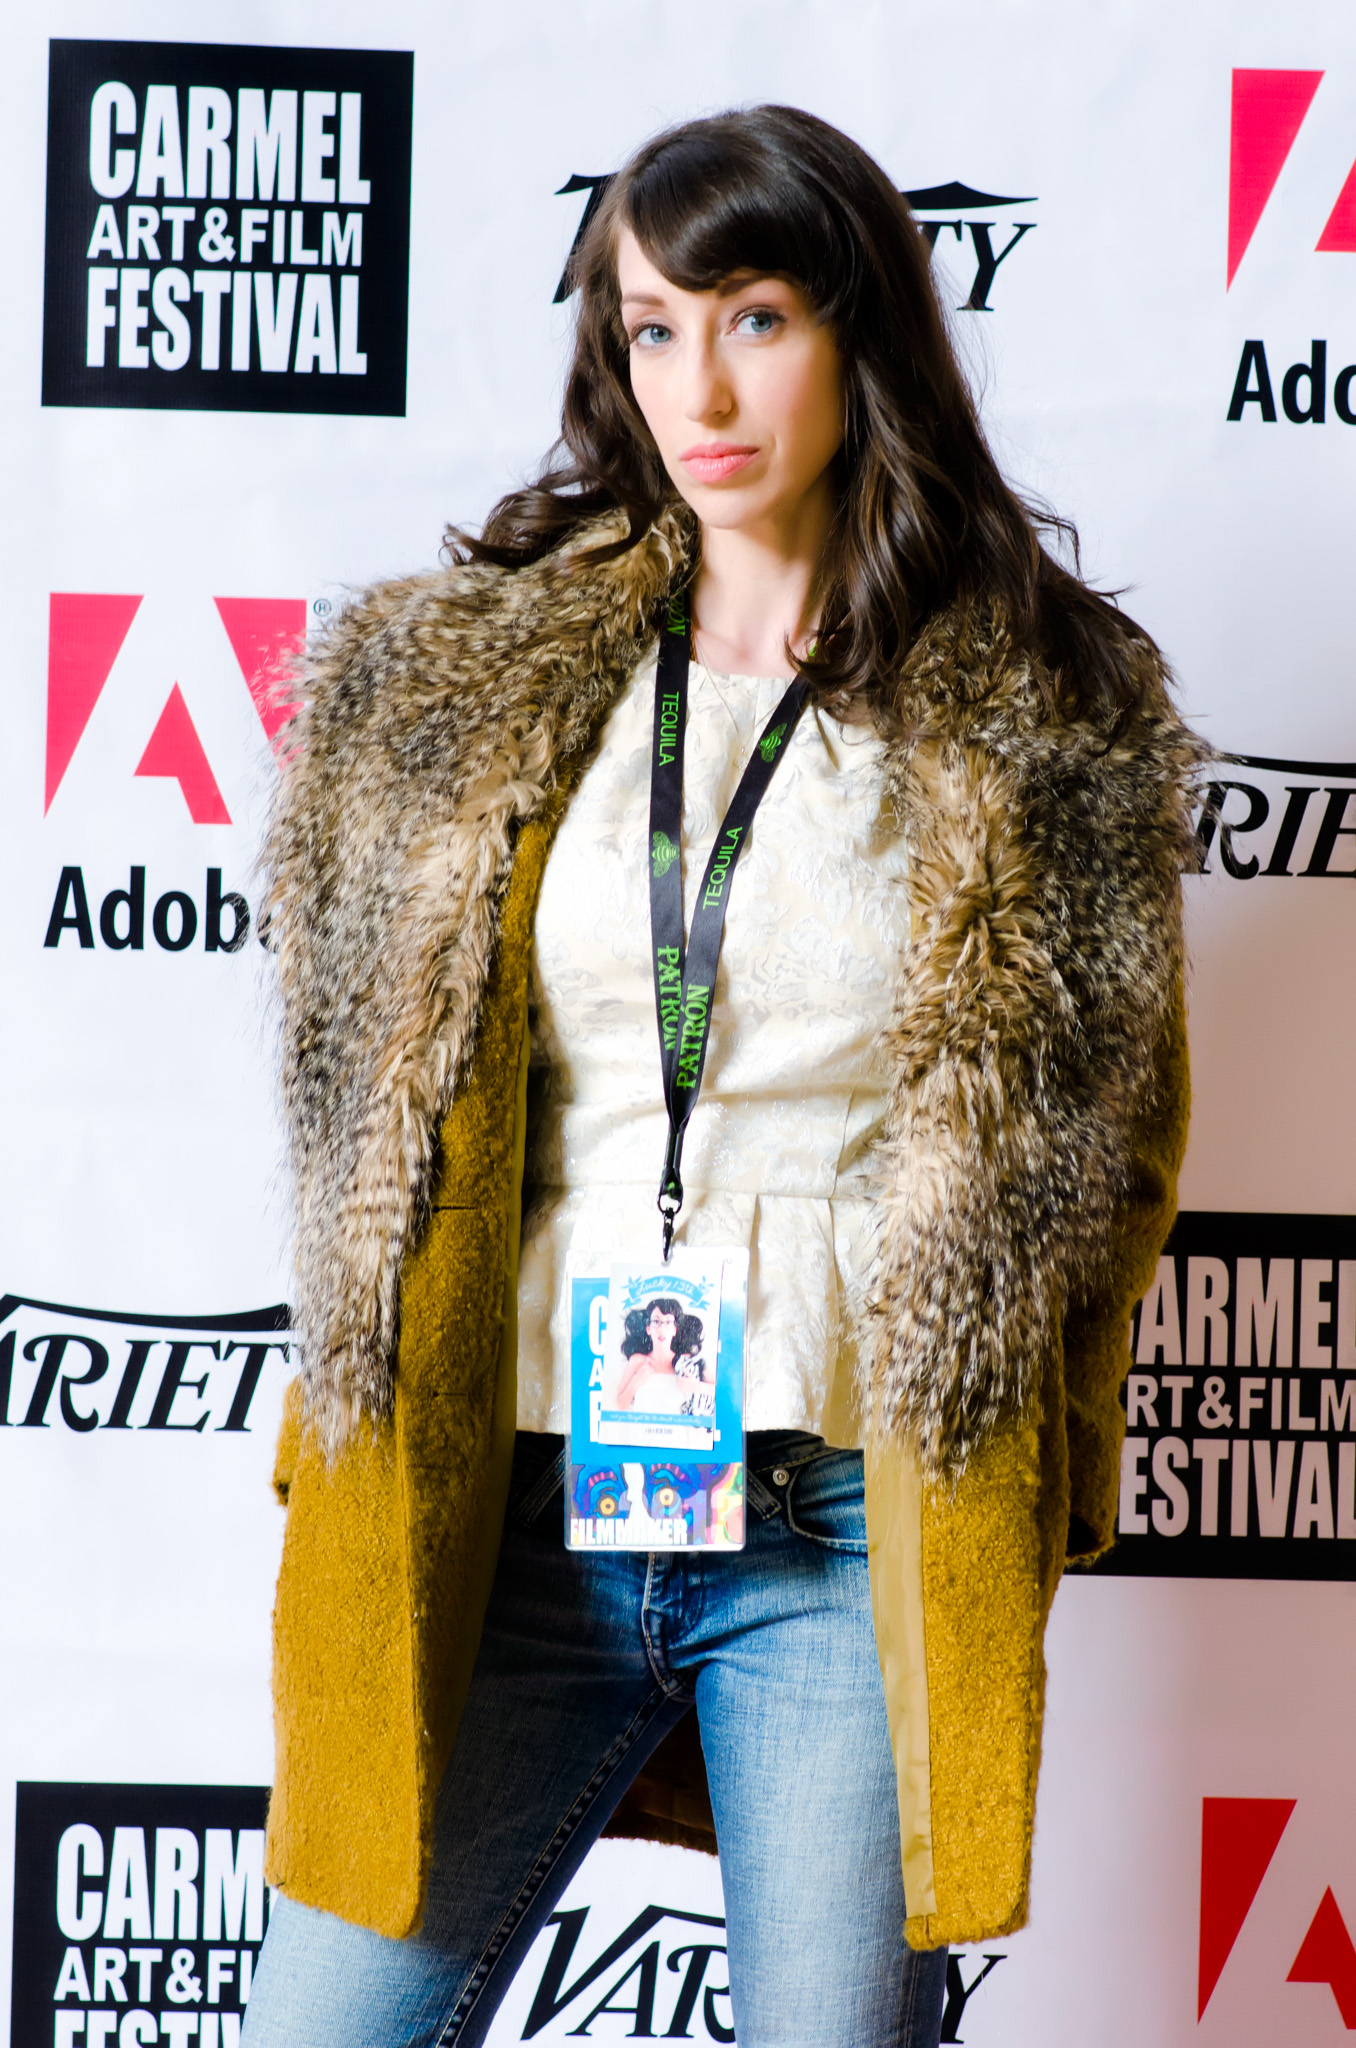 Kirstin Zotovich at the 2013 Carmel Art & Film Festival